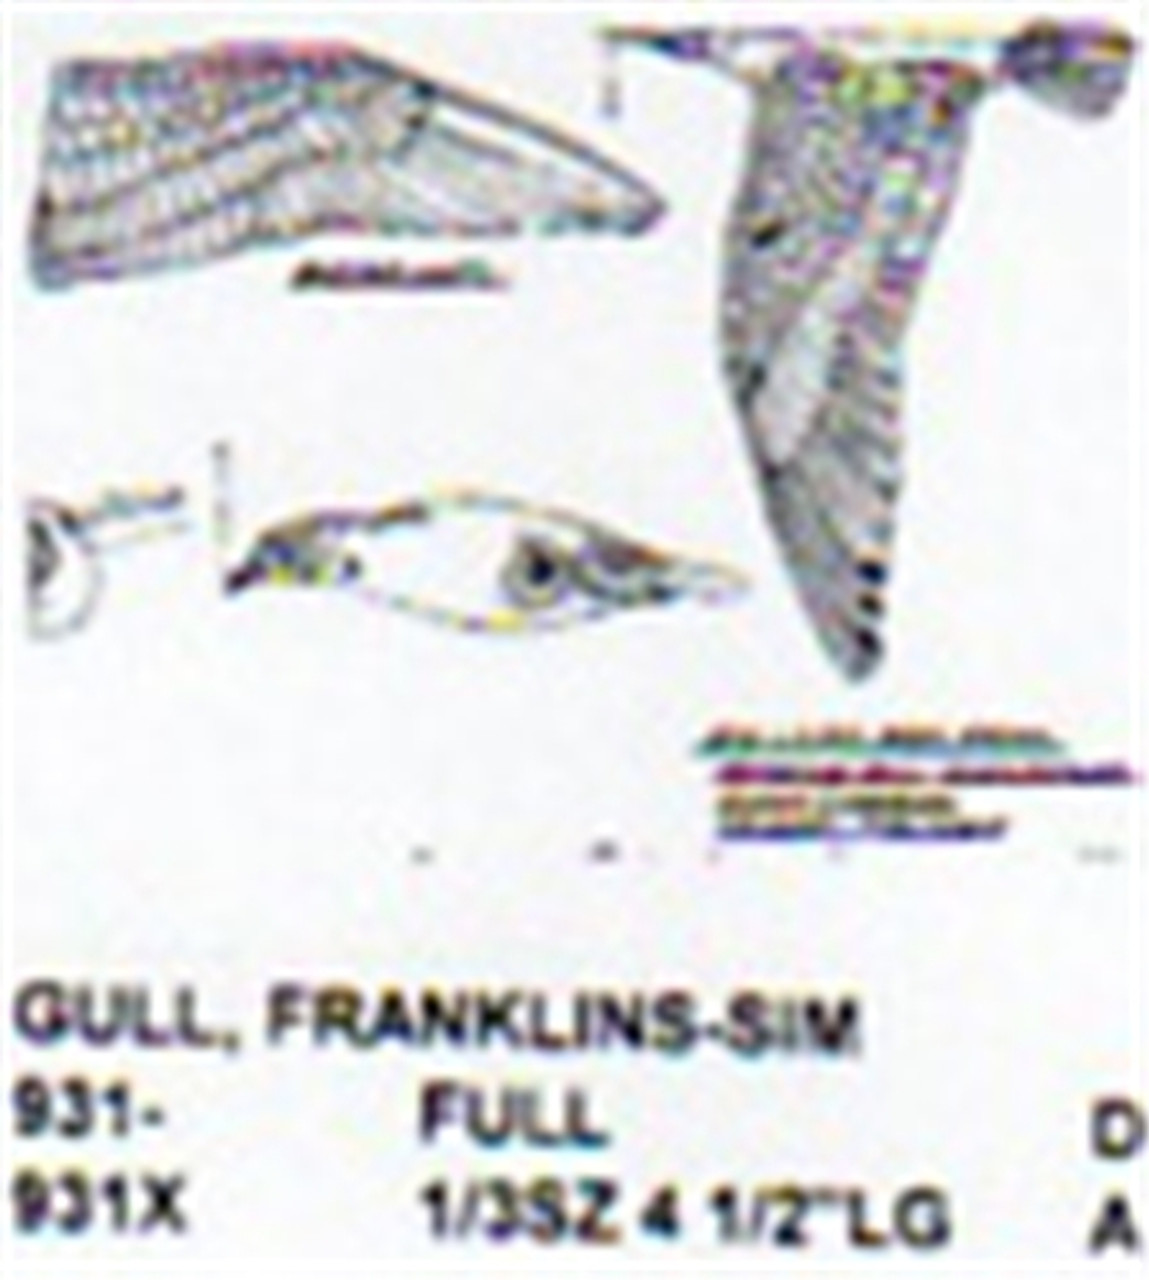 Franklin's Gull Flying-Soaring 1/3 Size